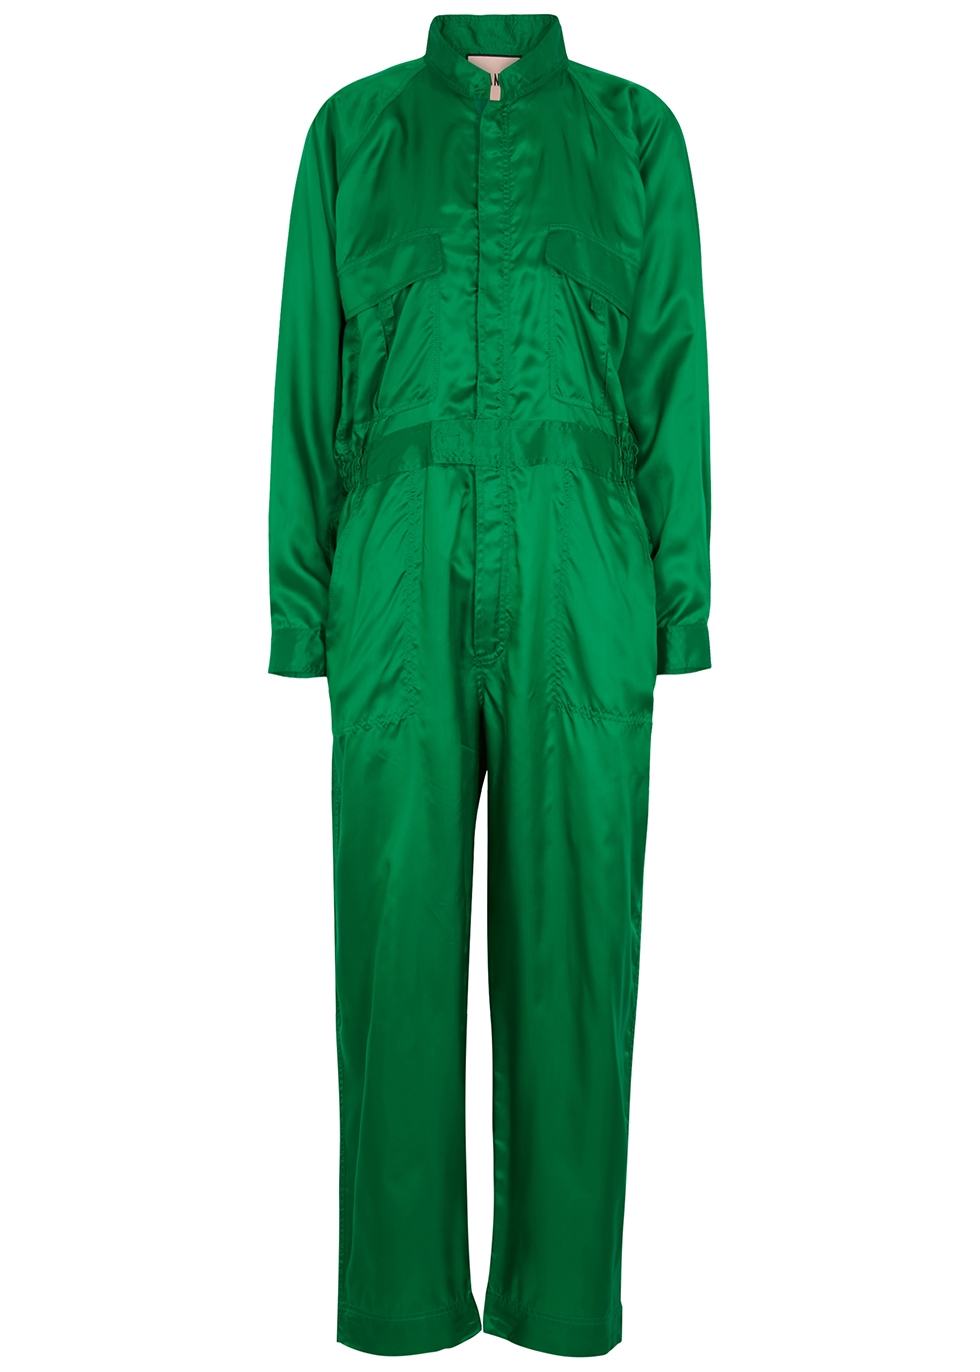 Emerald green cupro jumpsuit